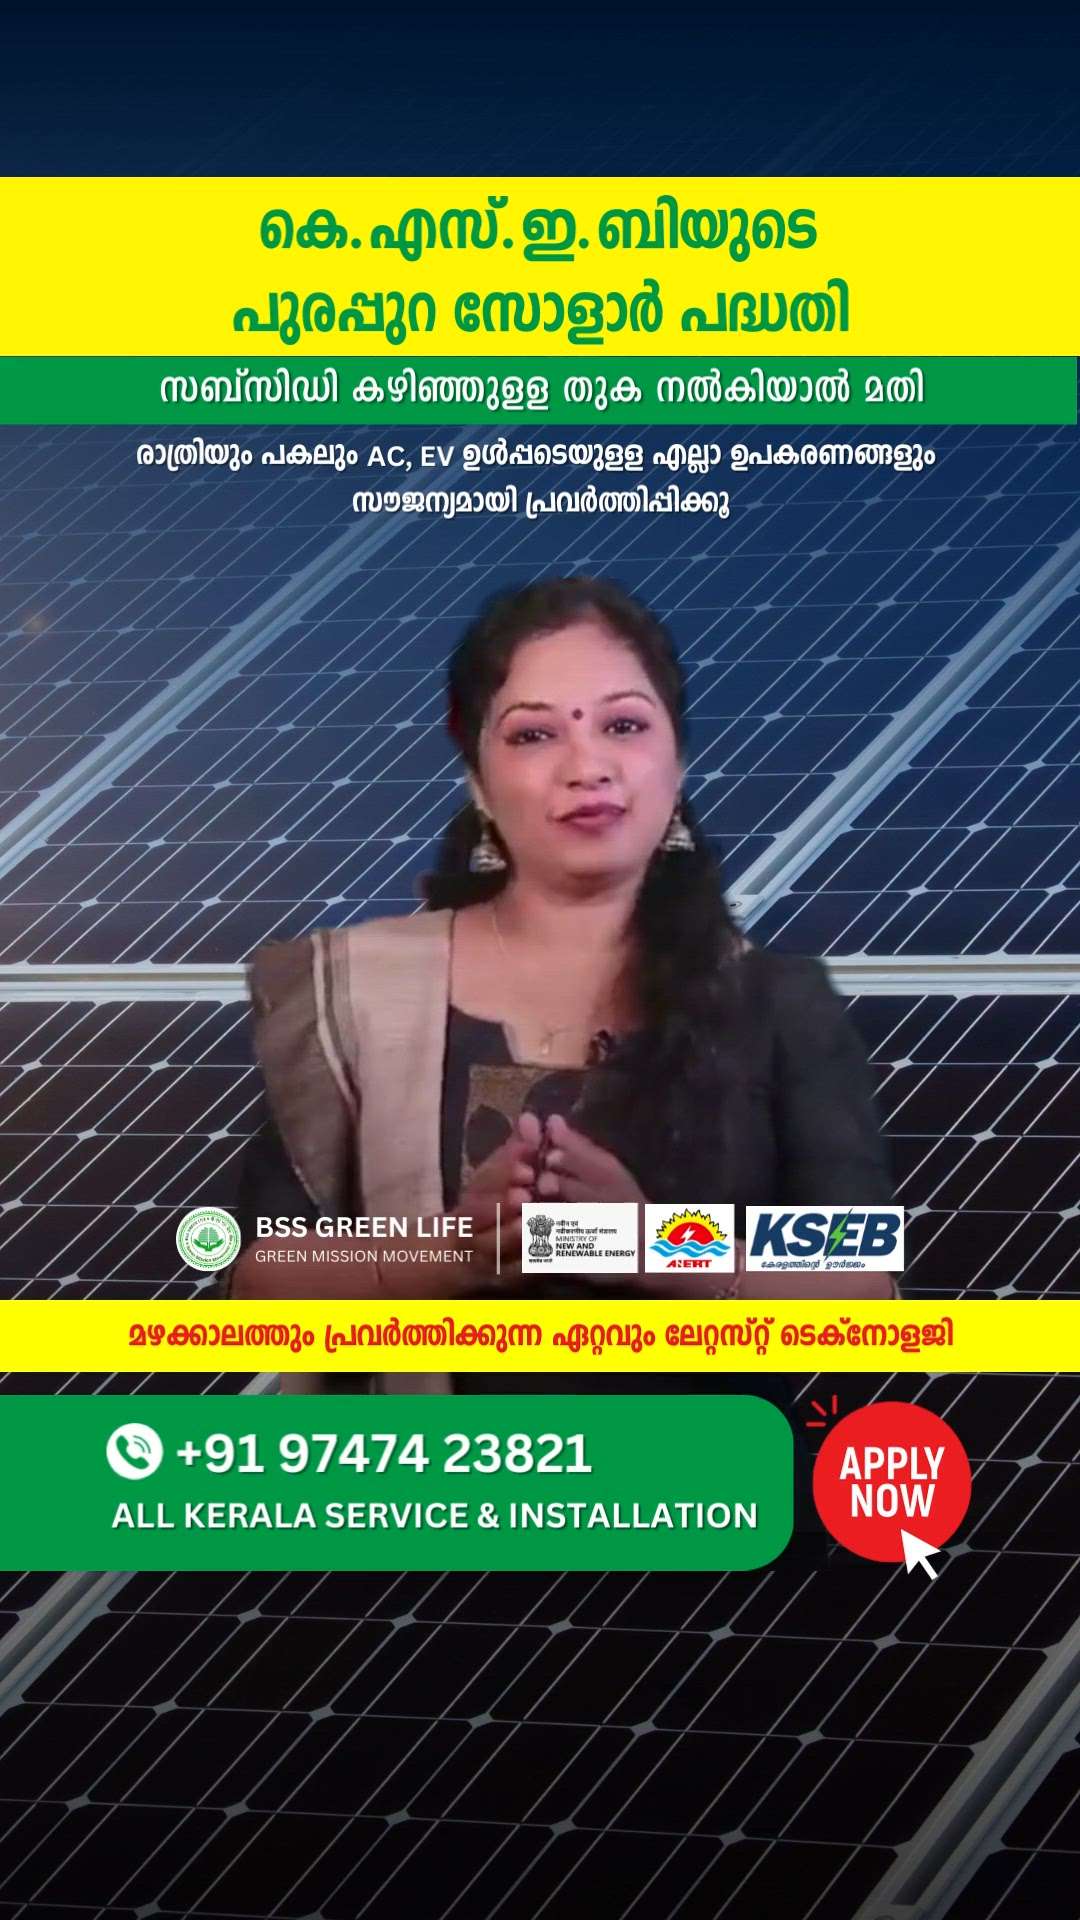 KSEB SOURA Solar subsidy projects
MNRE subsidy projects 
call 702 5672 508